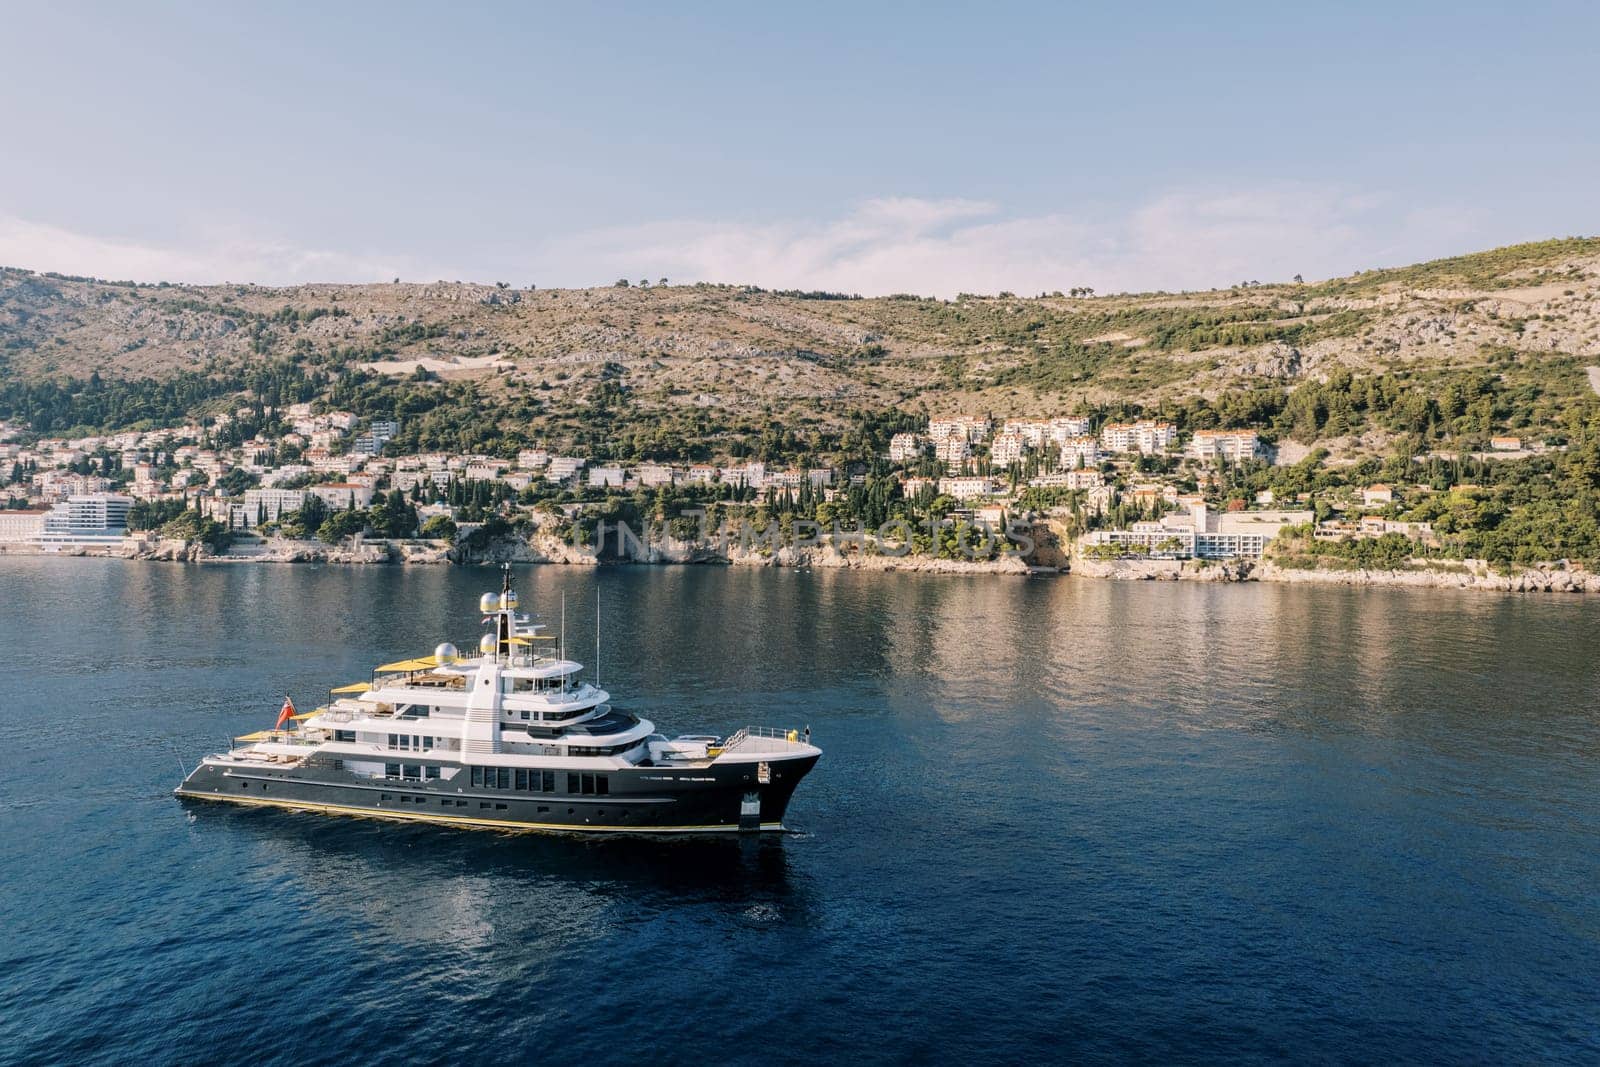 Luxury three-deck yacht sails along the mountainous coastline. High quality photo